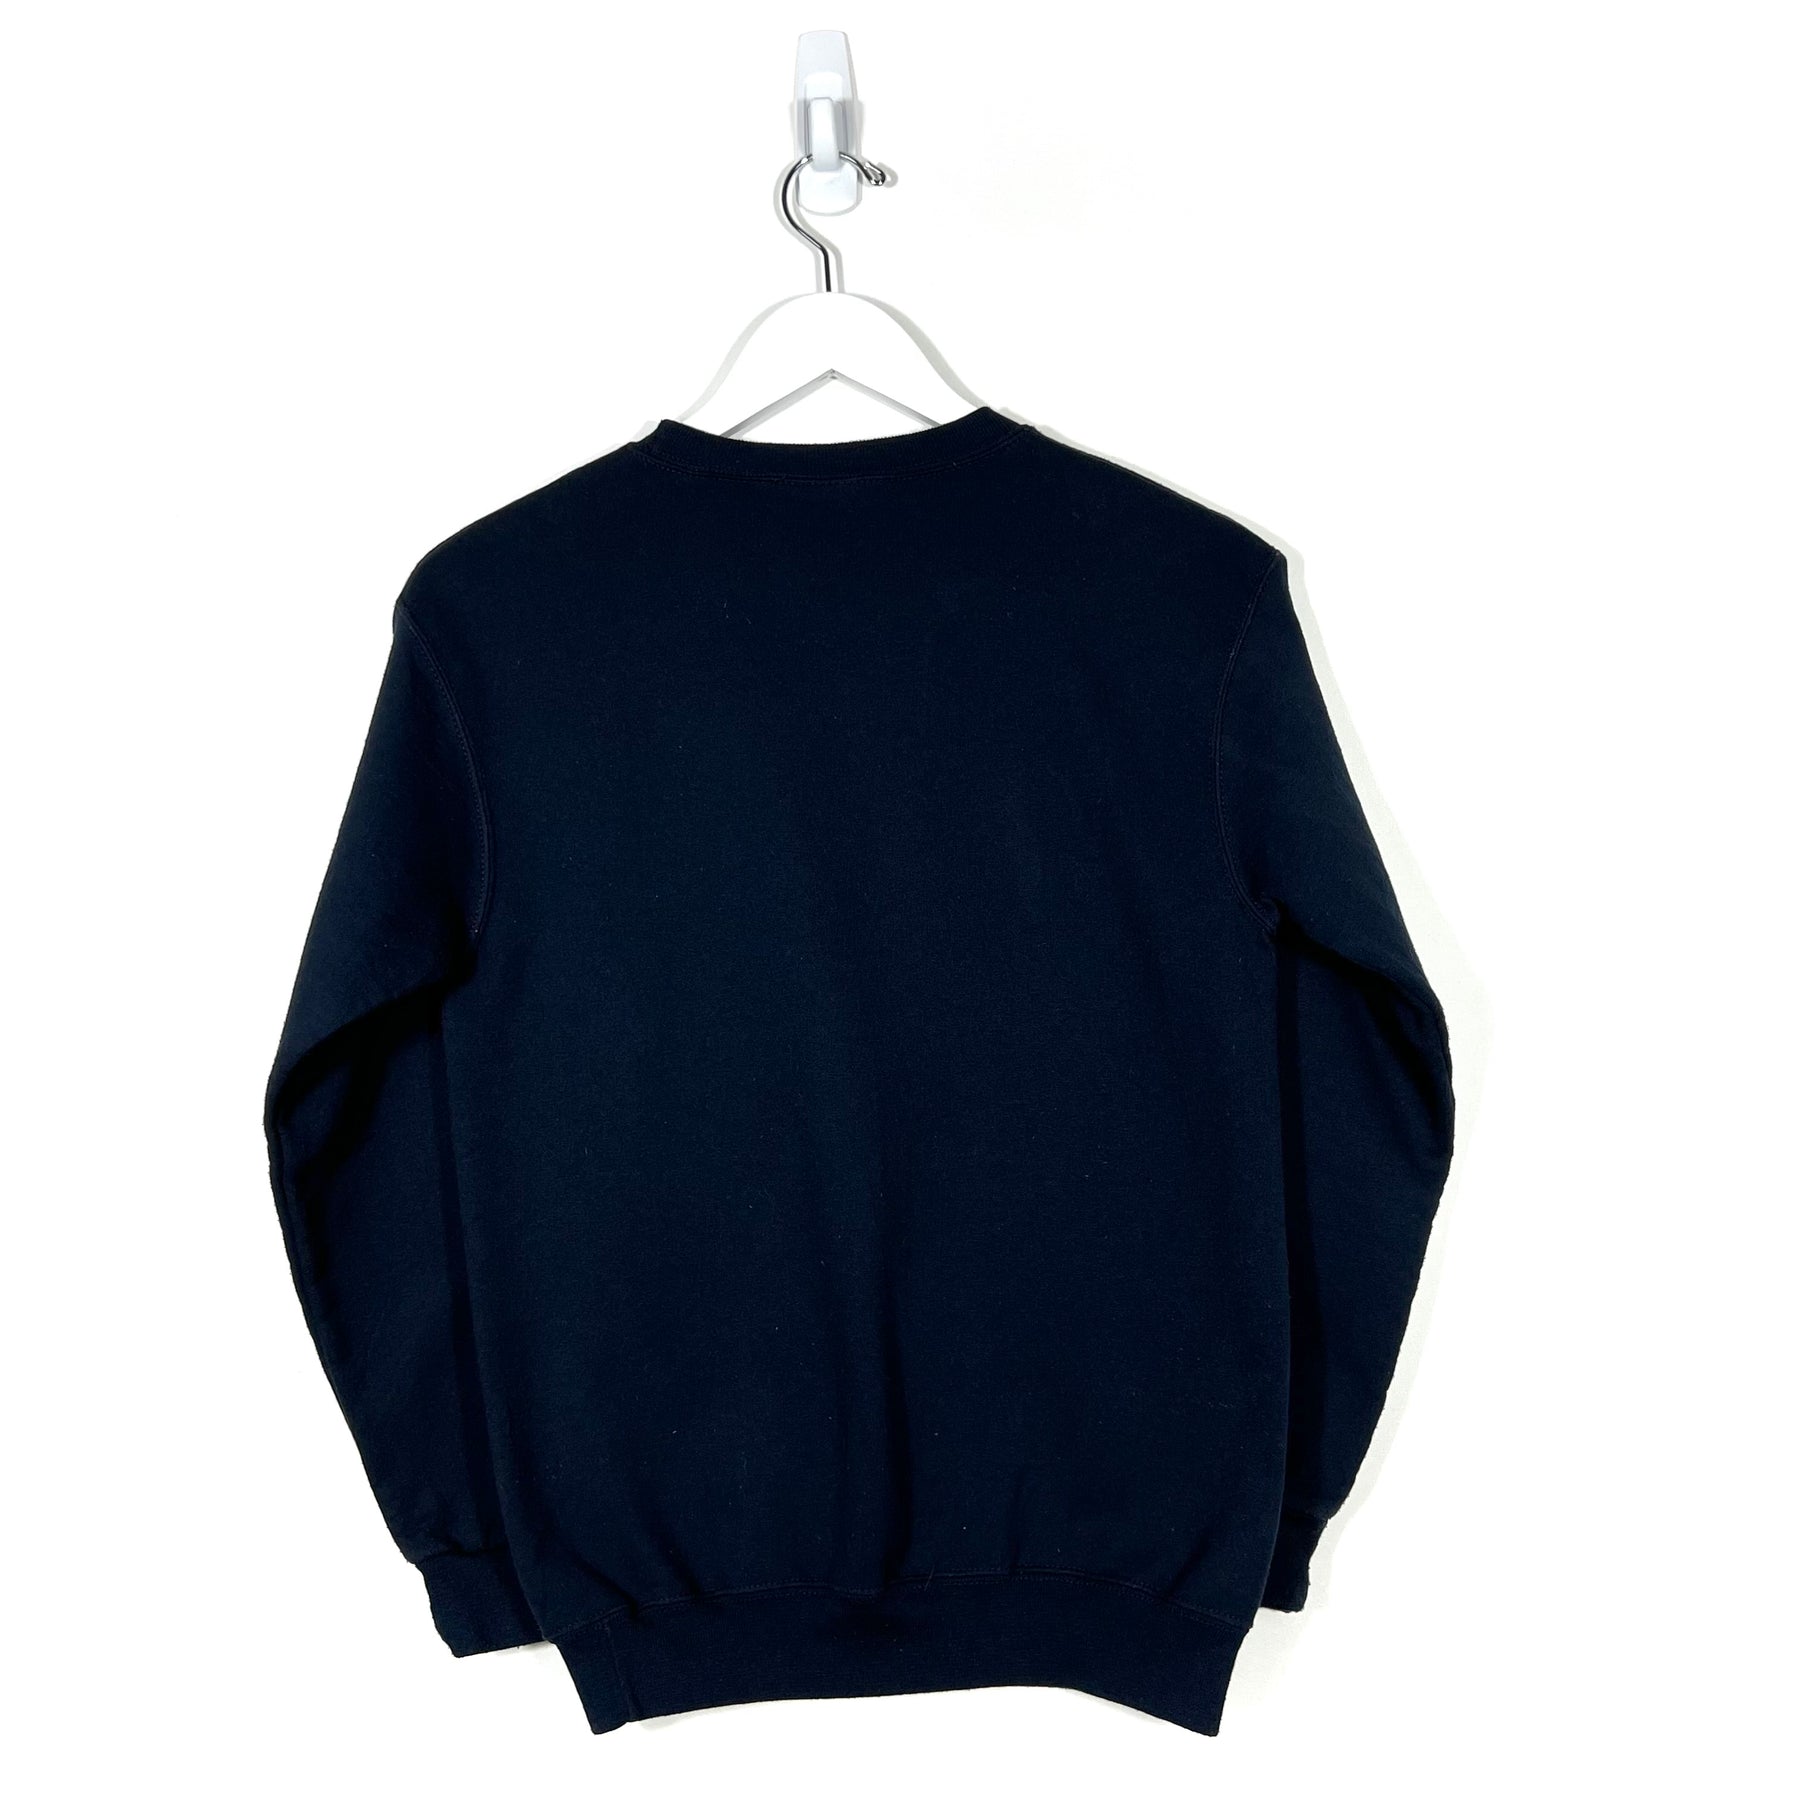 Vintage Champion Navy Crewneck Sweatshirt - Women's Medium